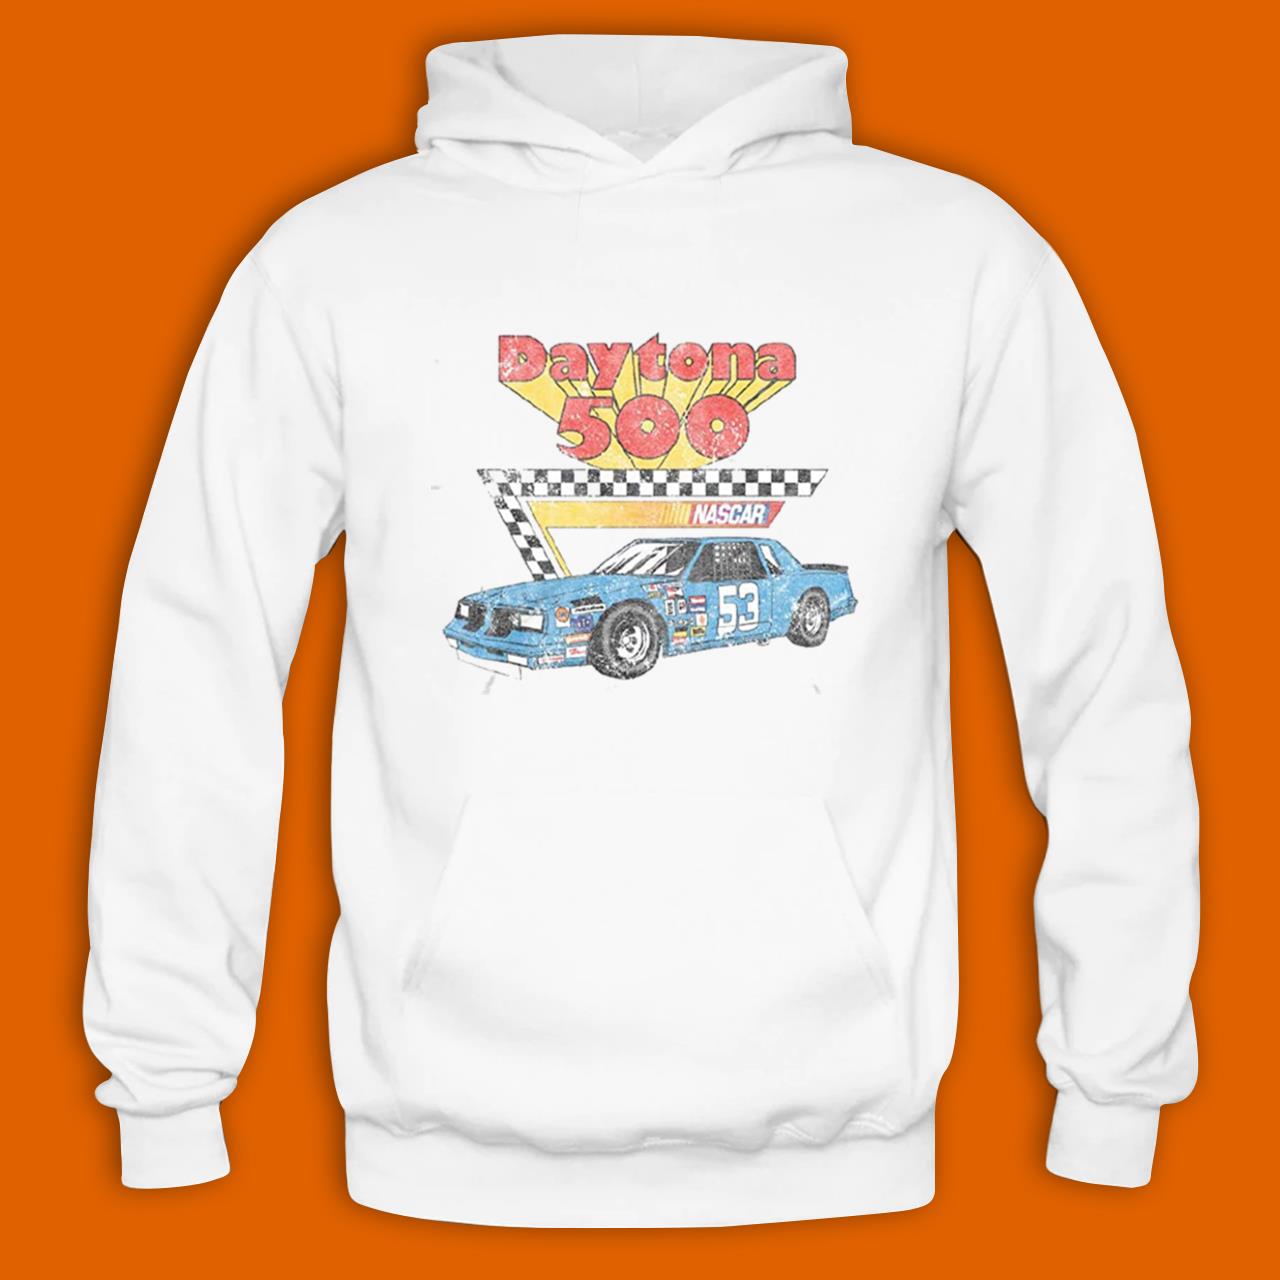 NASCAR Vintage Daytona 500 Racing Shirt